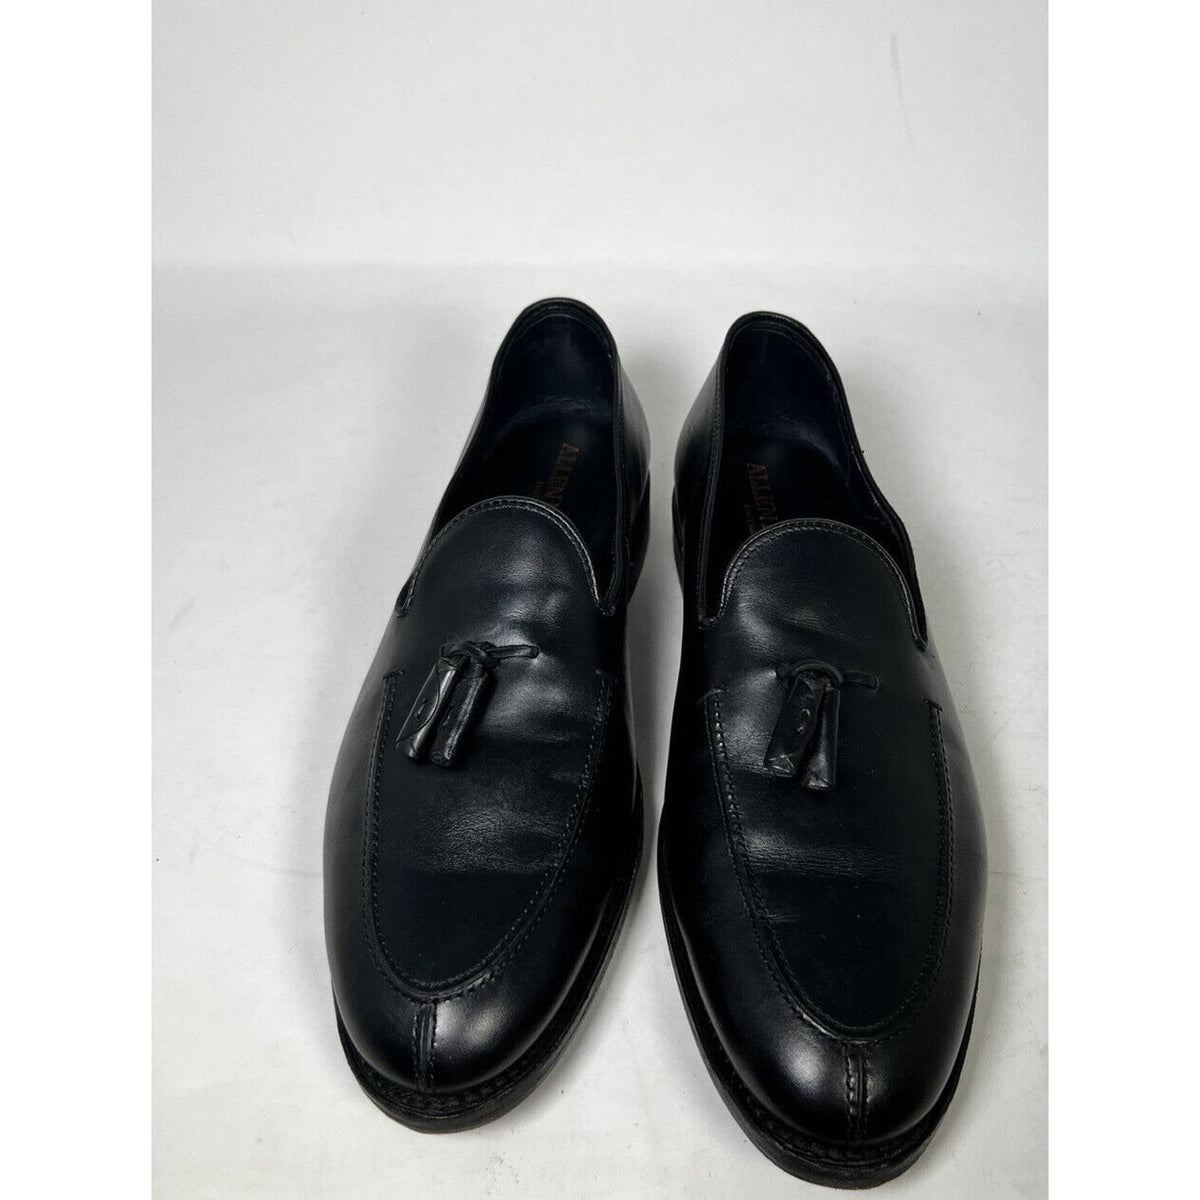 Allen Edmonds Spring Street Black Leather Loafers Sz. 9.5 D